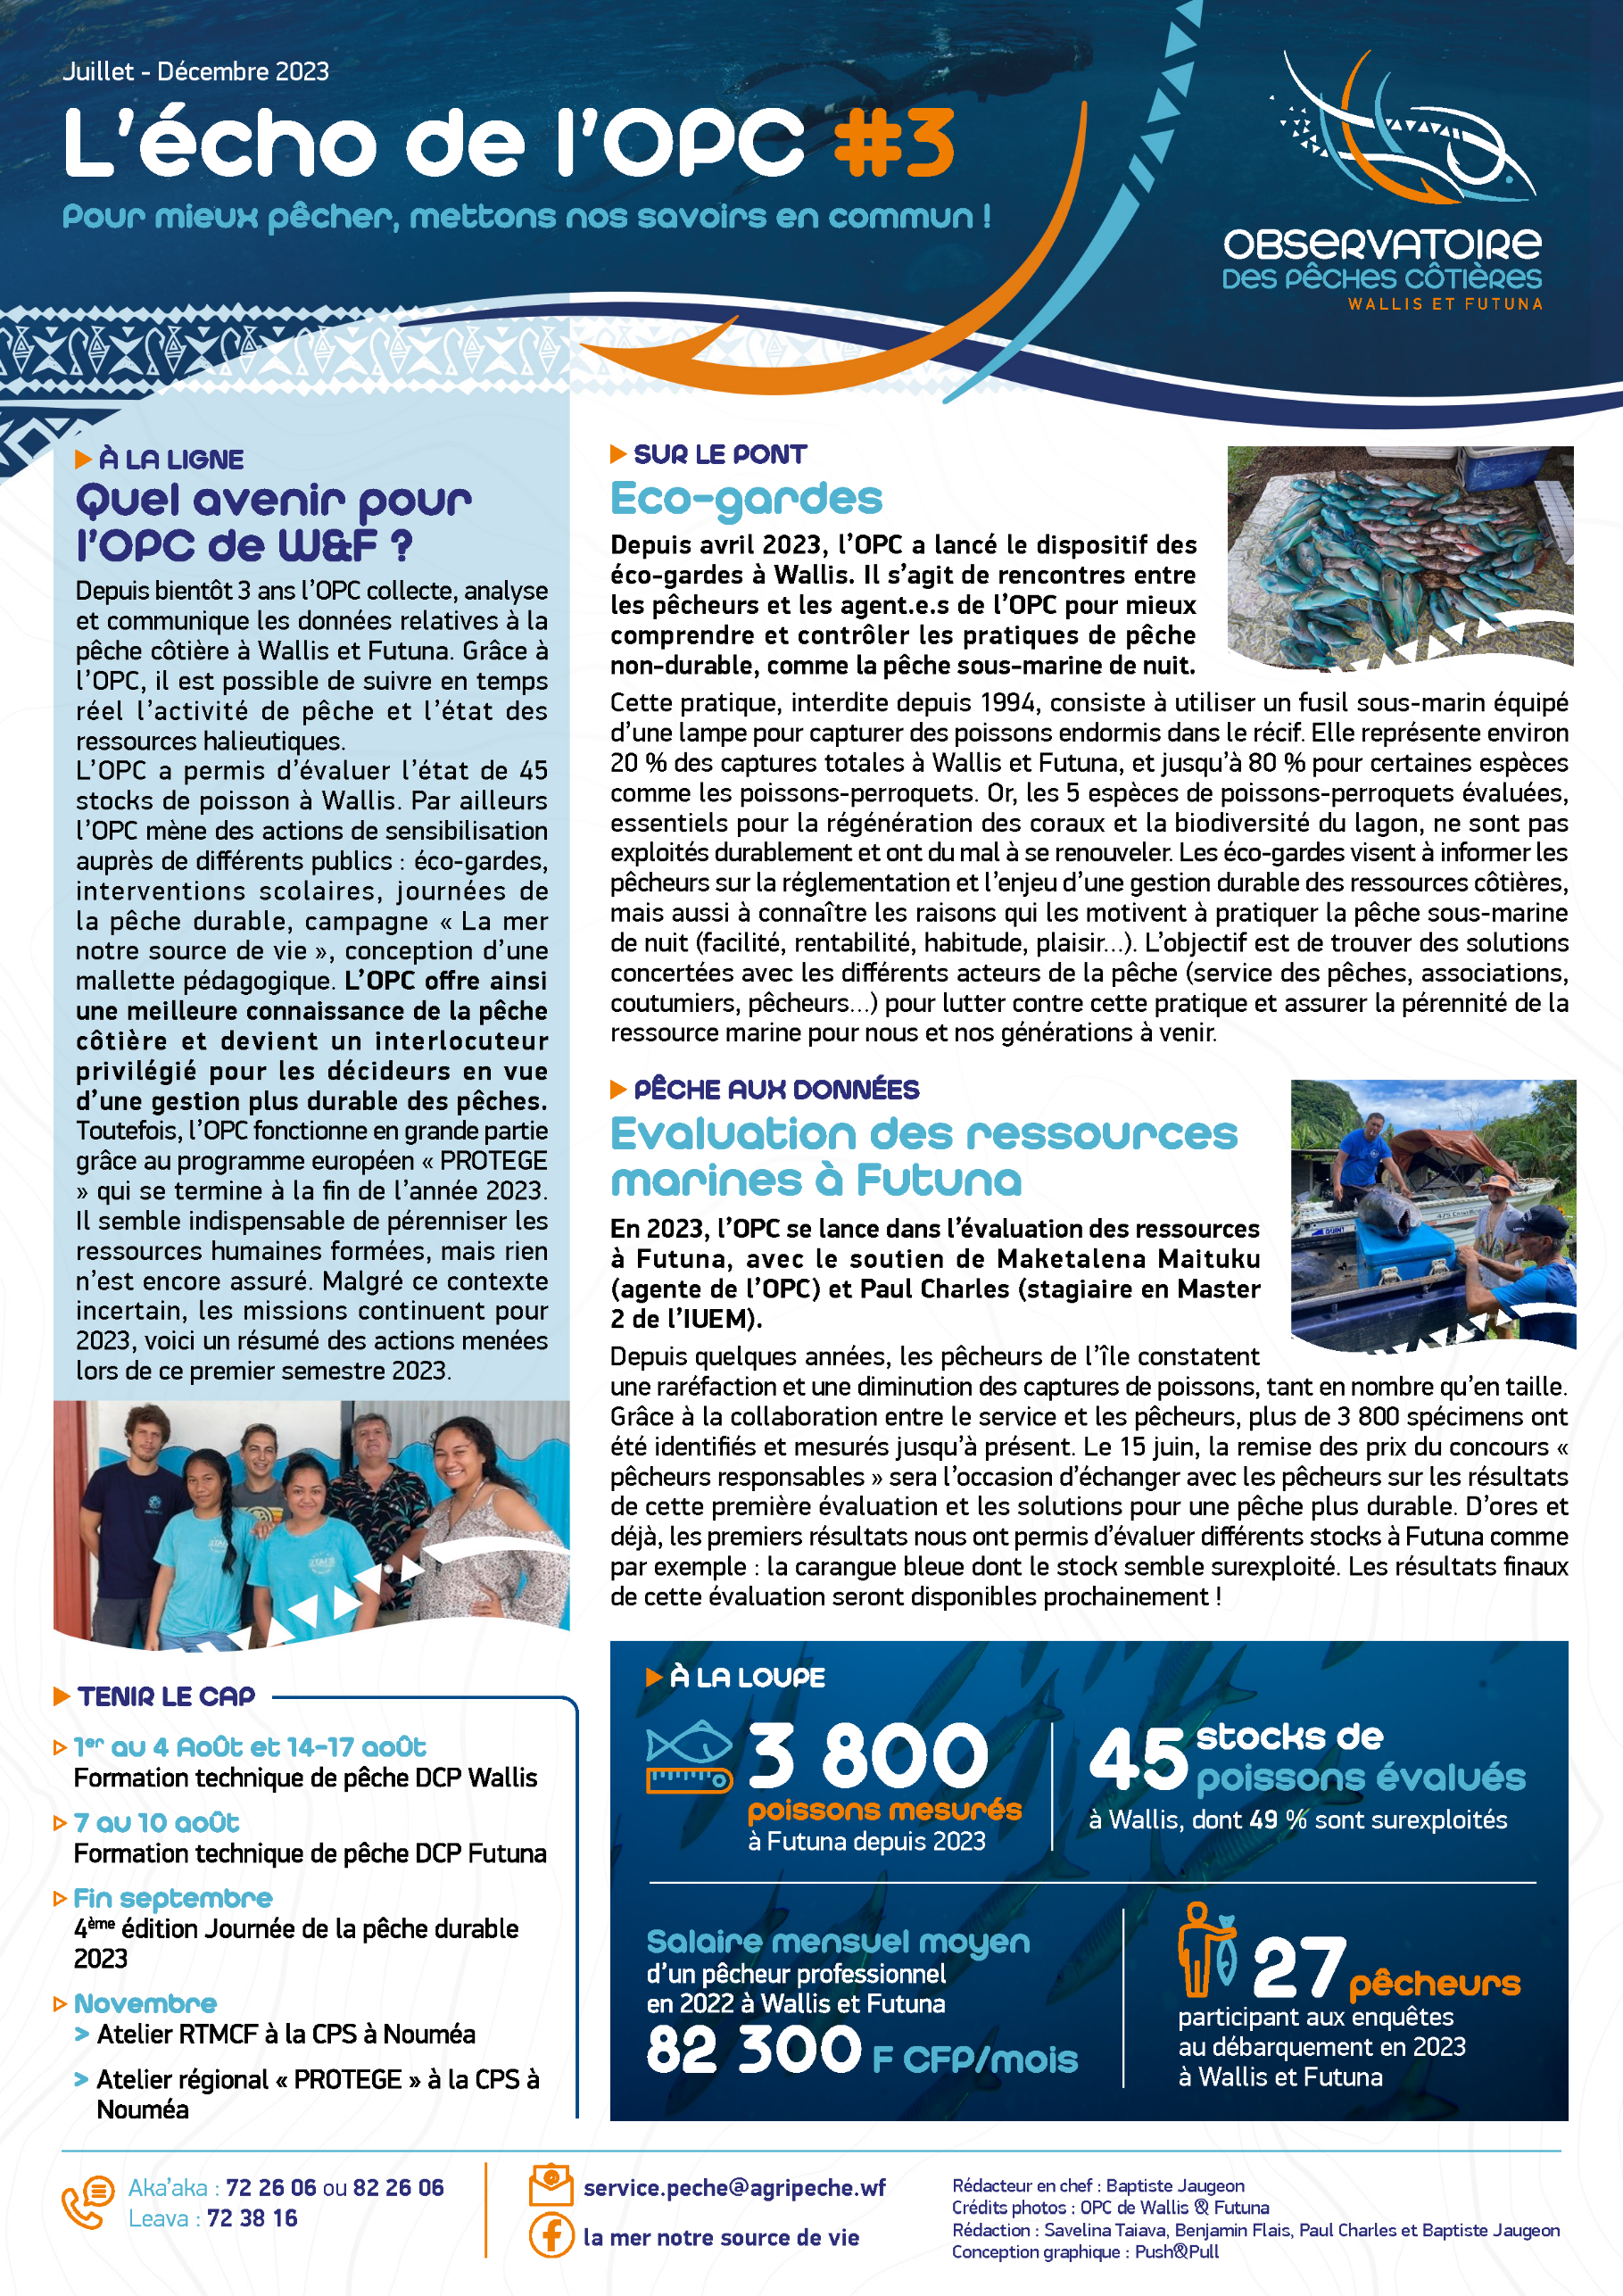 Newsletter 3 Observatoire des pêches côtières de Wallis et Futuna (calameo.com)